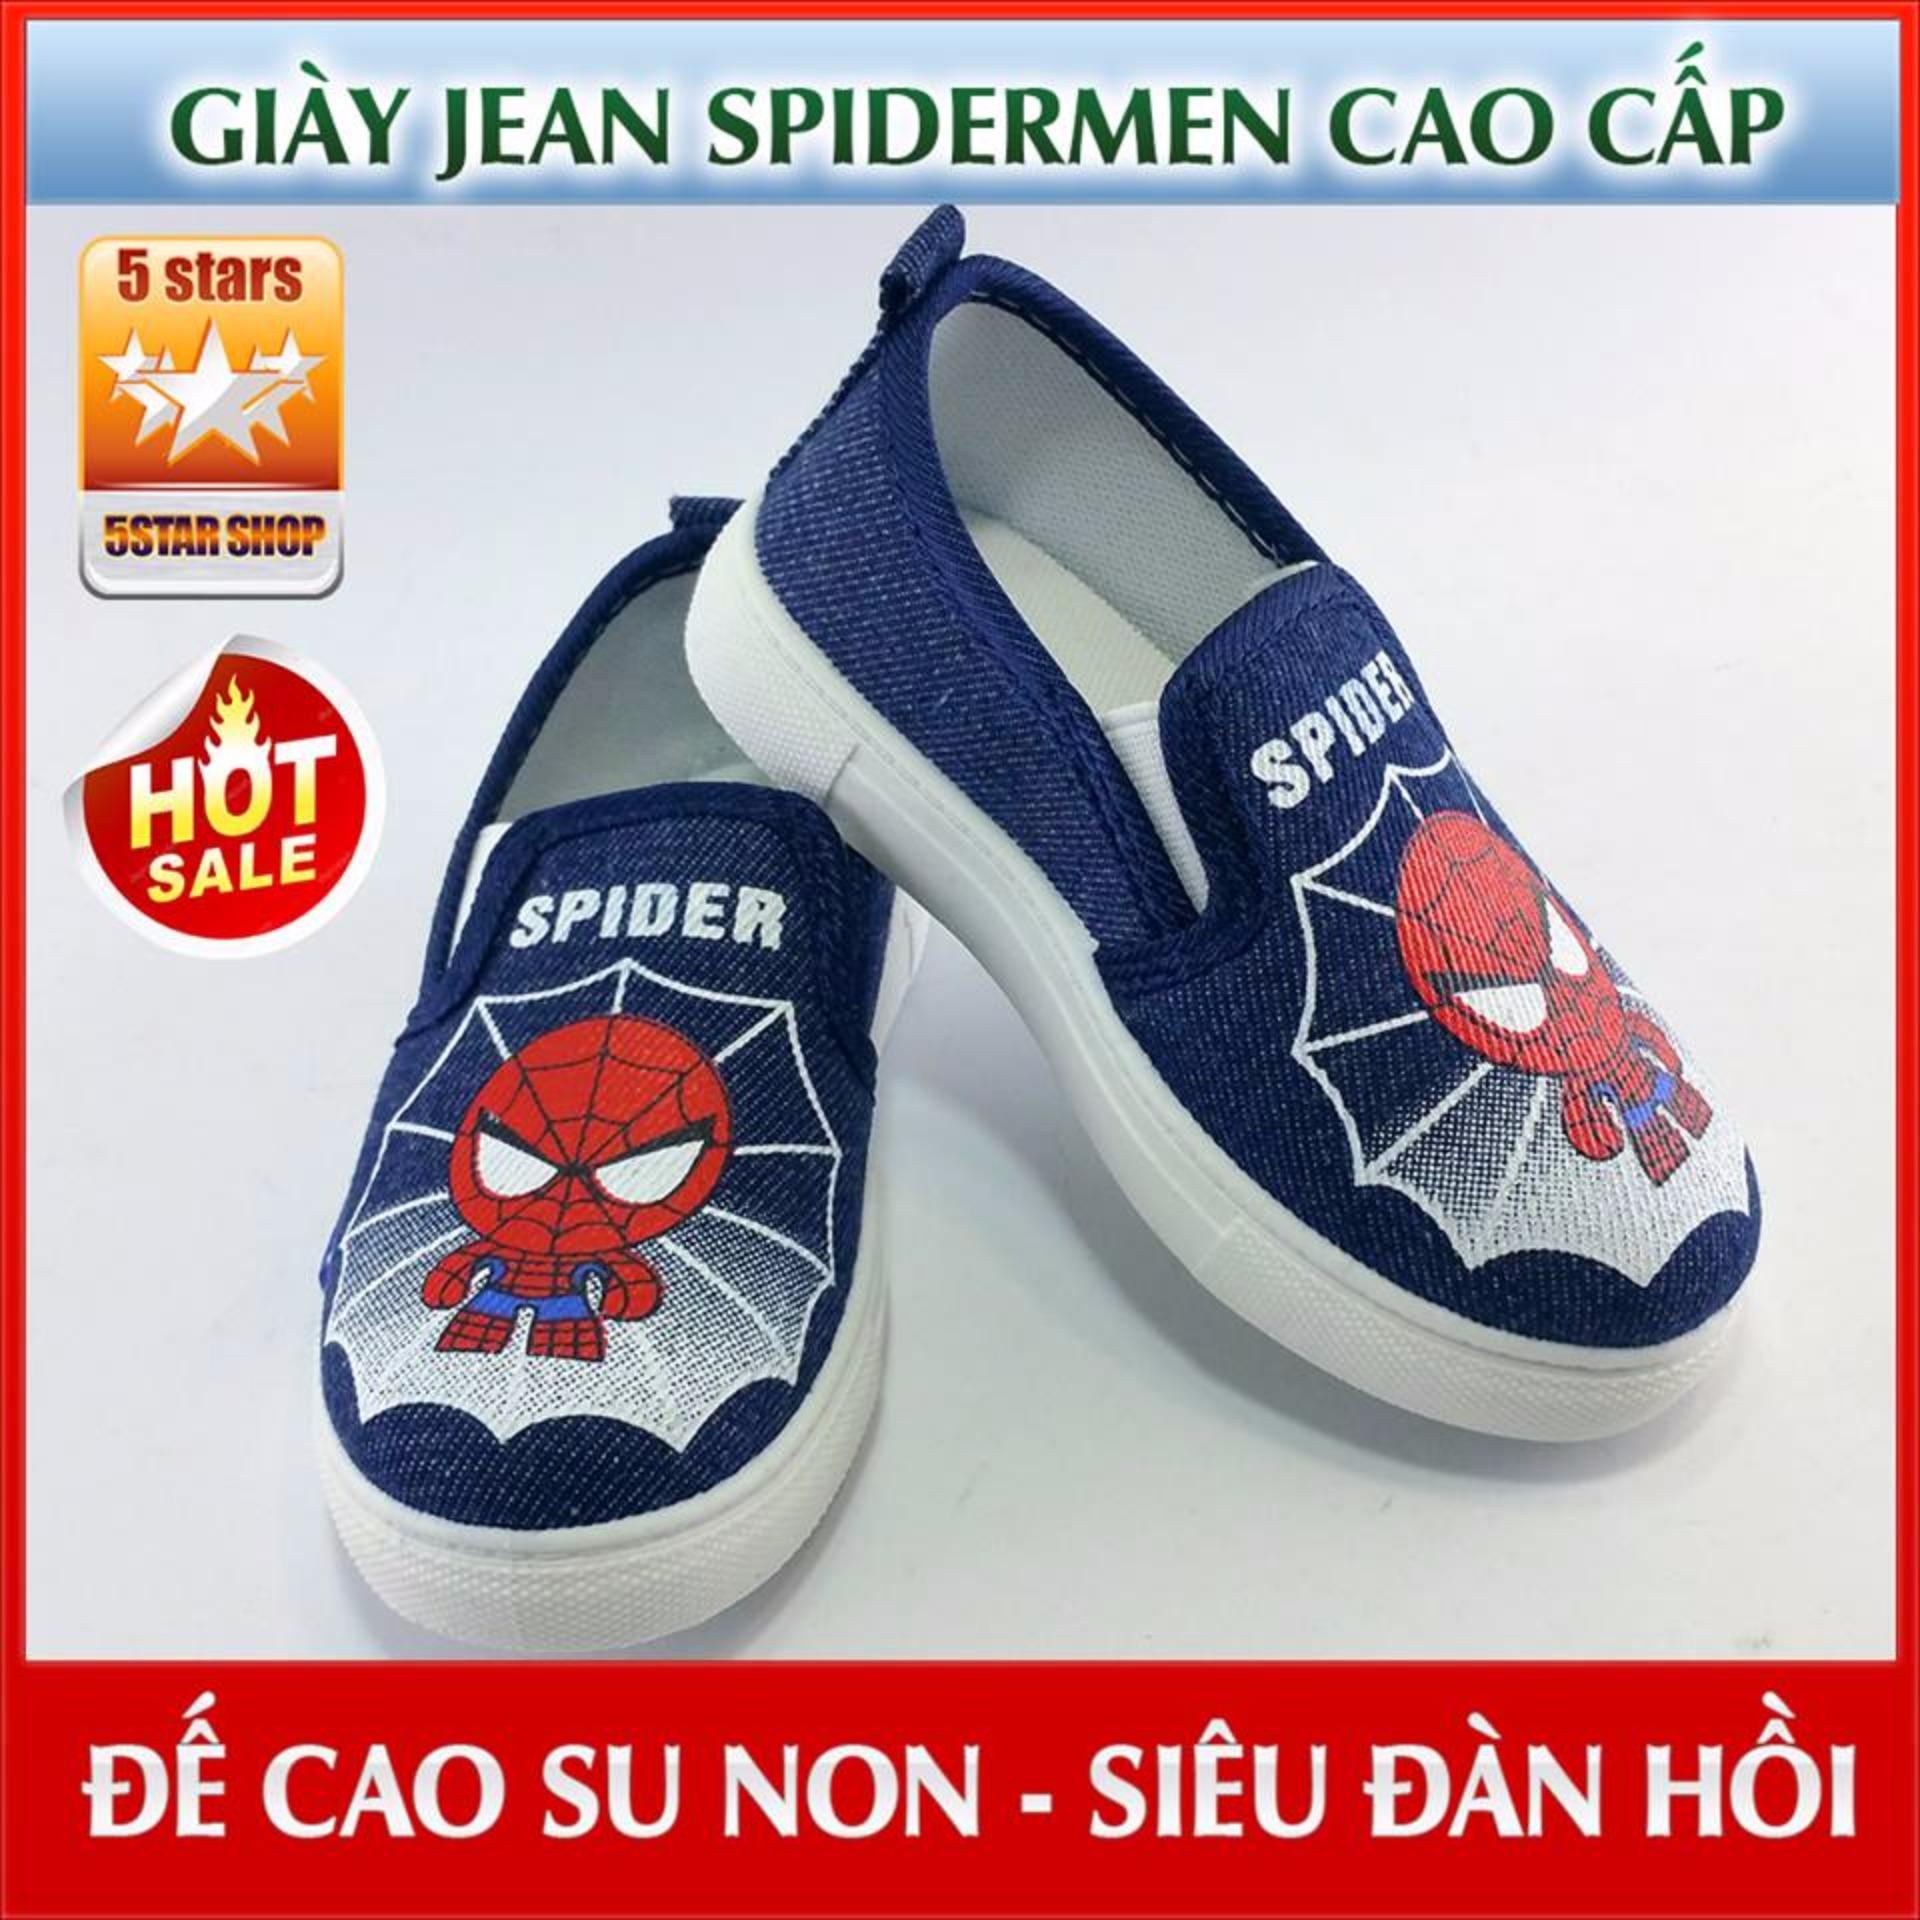 Giày Jean Spidermen cao cấp